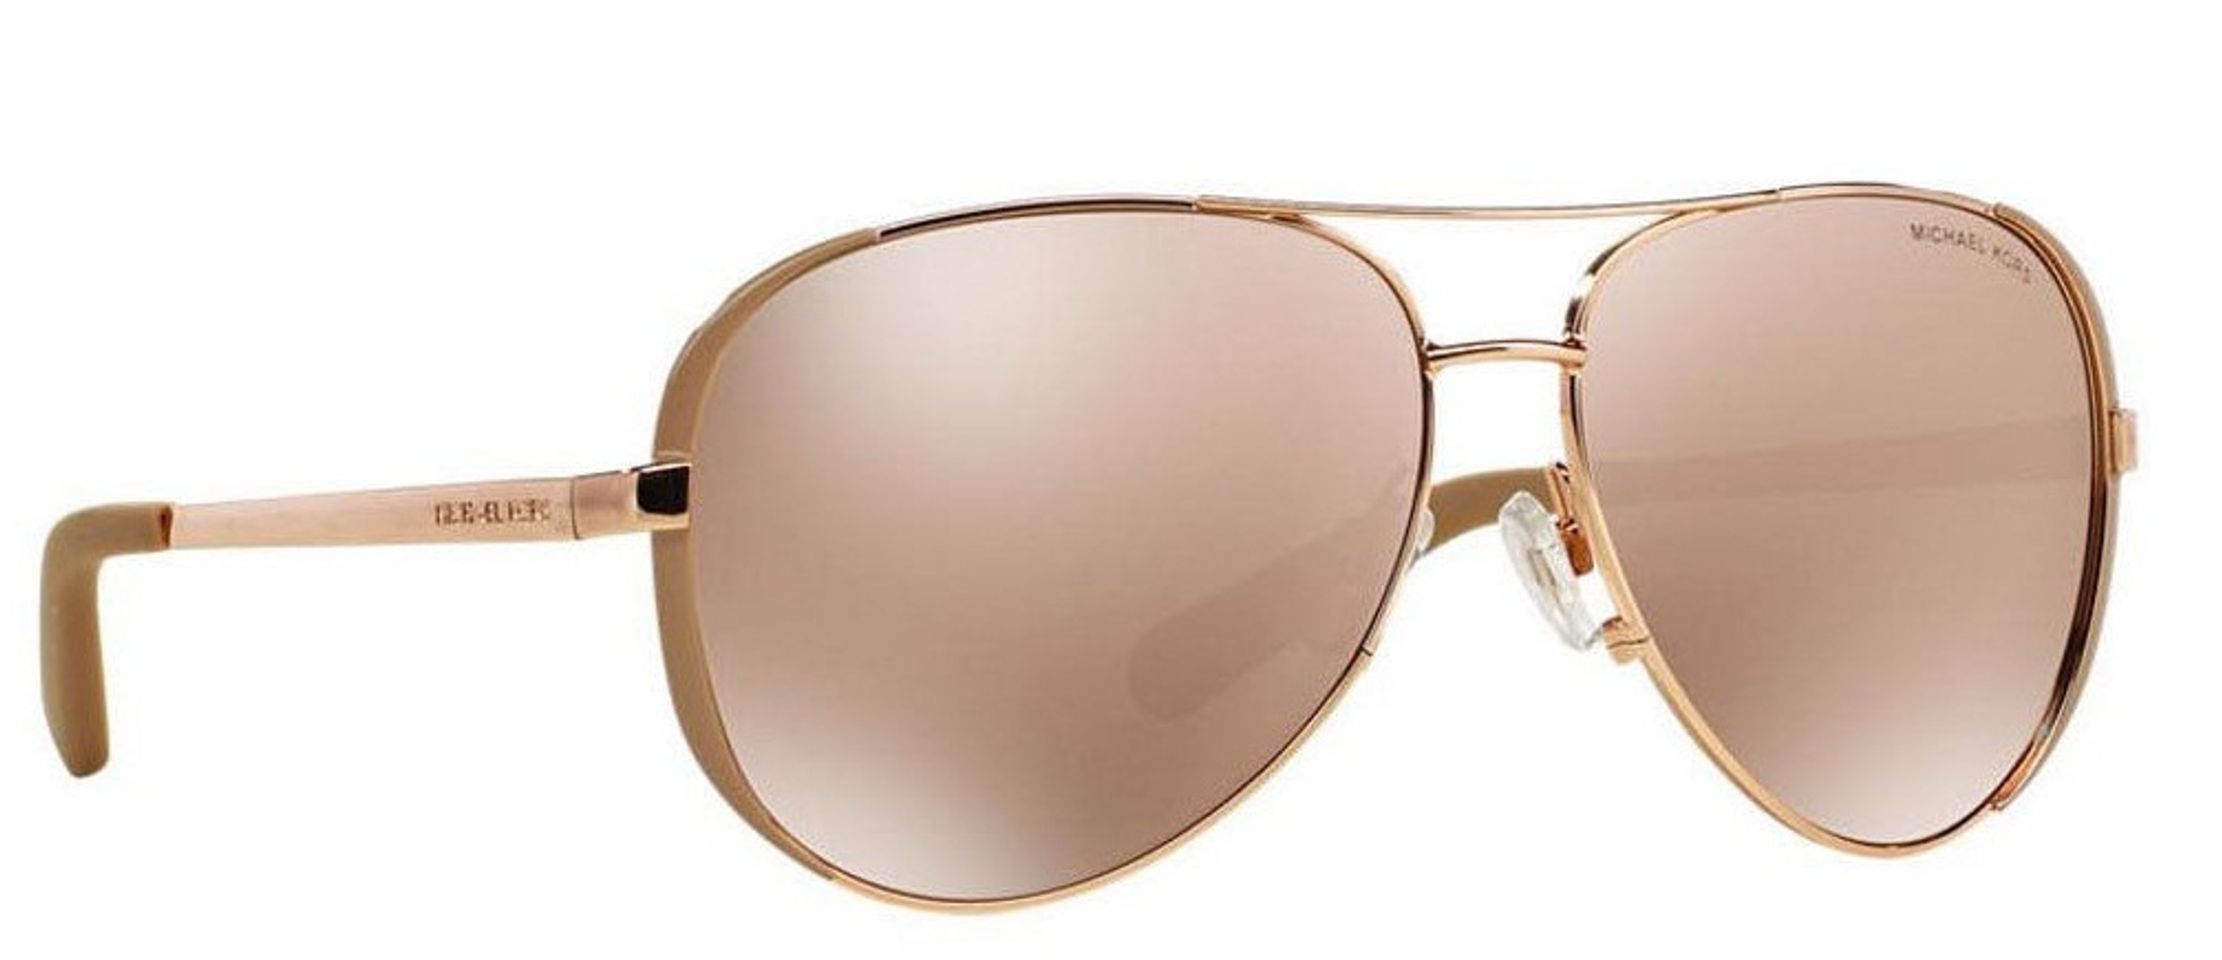 Michael Kors Sunglasses MK5004 Chelsea  Michael kors sunglasses Michael  kors Sunglasses